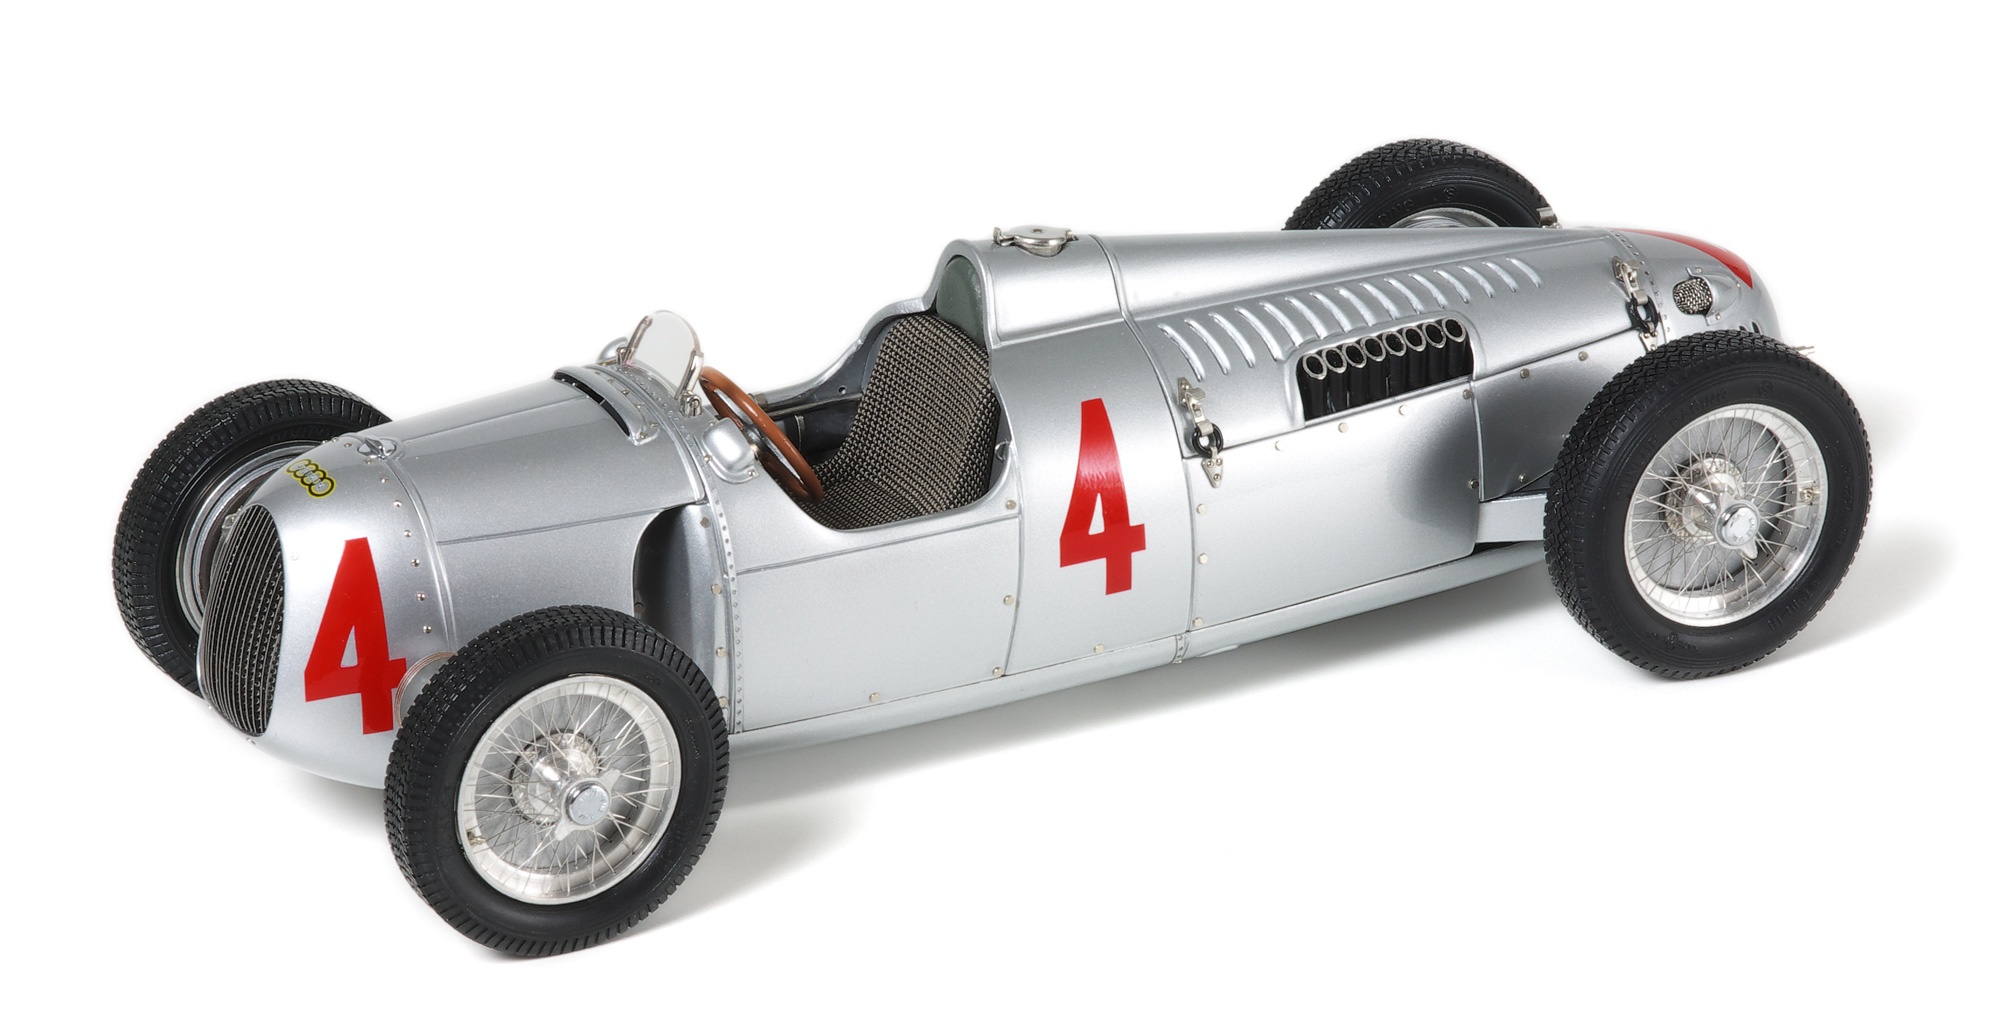 Rosemeyer Die cast 1/43 Modellino Auto F1 Auto Union Typ C Grand Prix 1936 B 